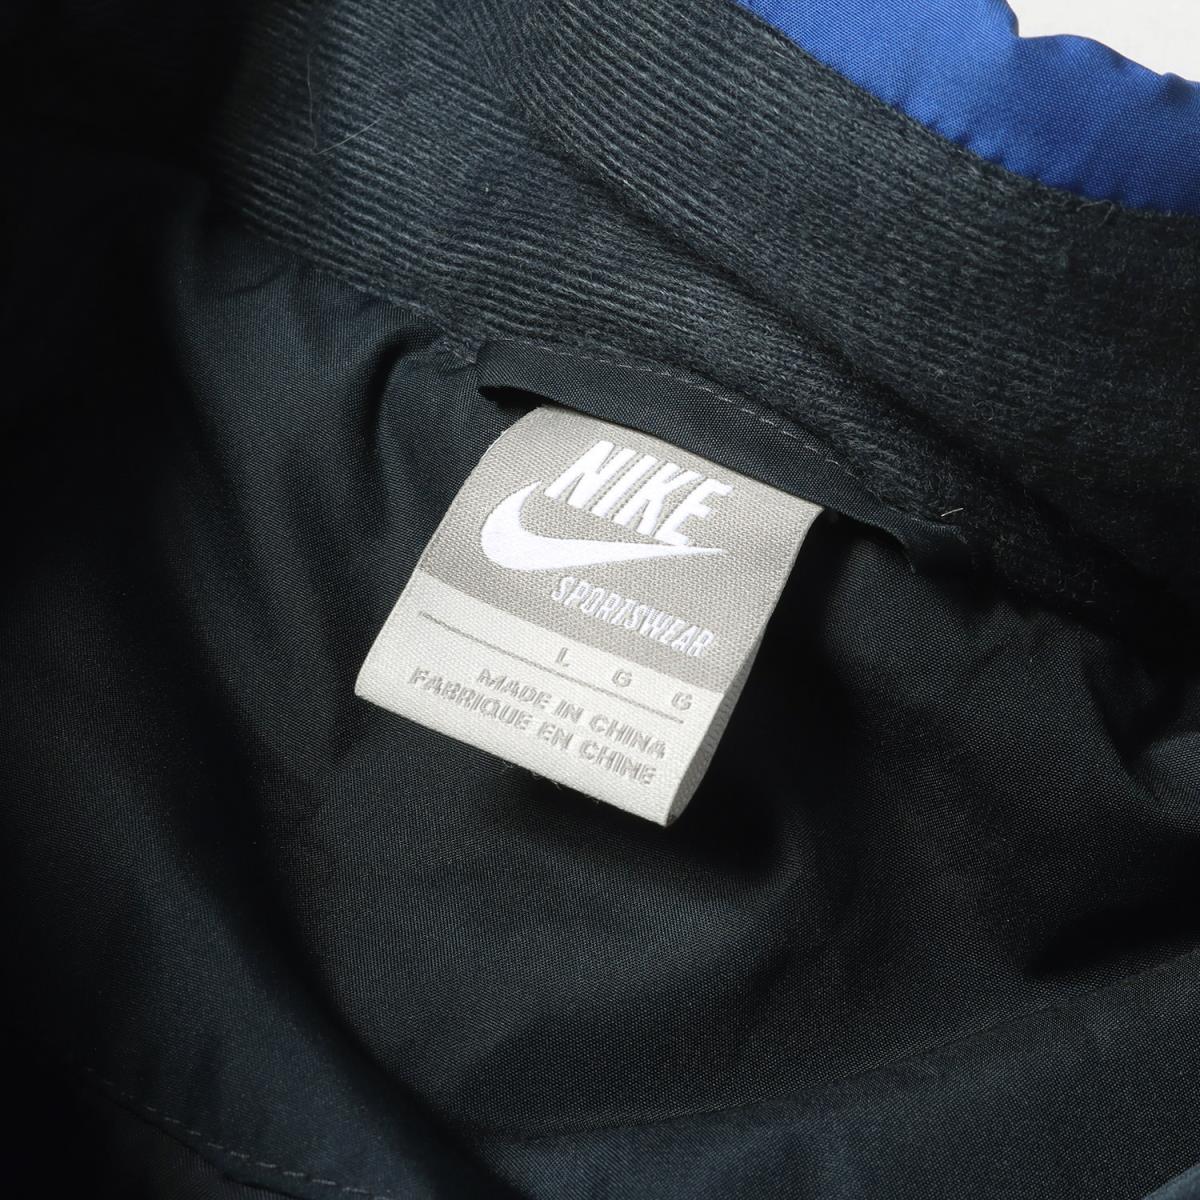 NIKE ナイキ ジャケット スウッシュロゴ 中綿ジャケット ブルー ブラック 青黒 L アウター ブルゾン 【メンズ】【中古】【K3453】